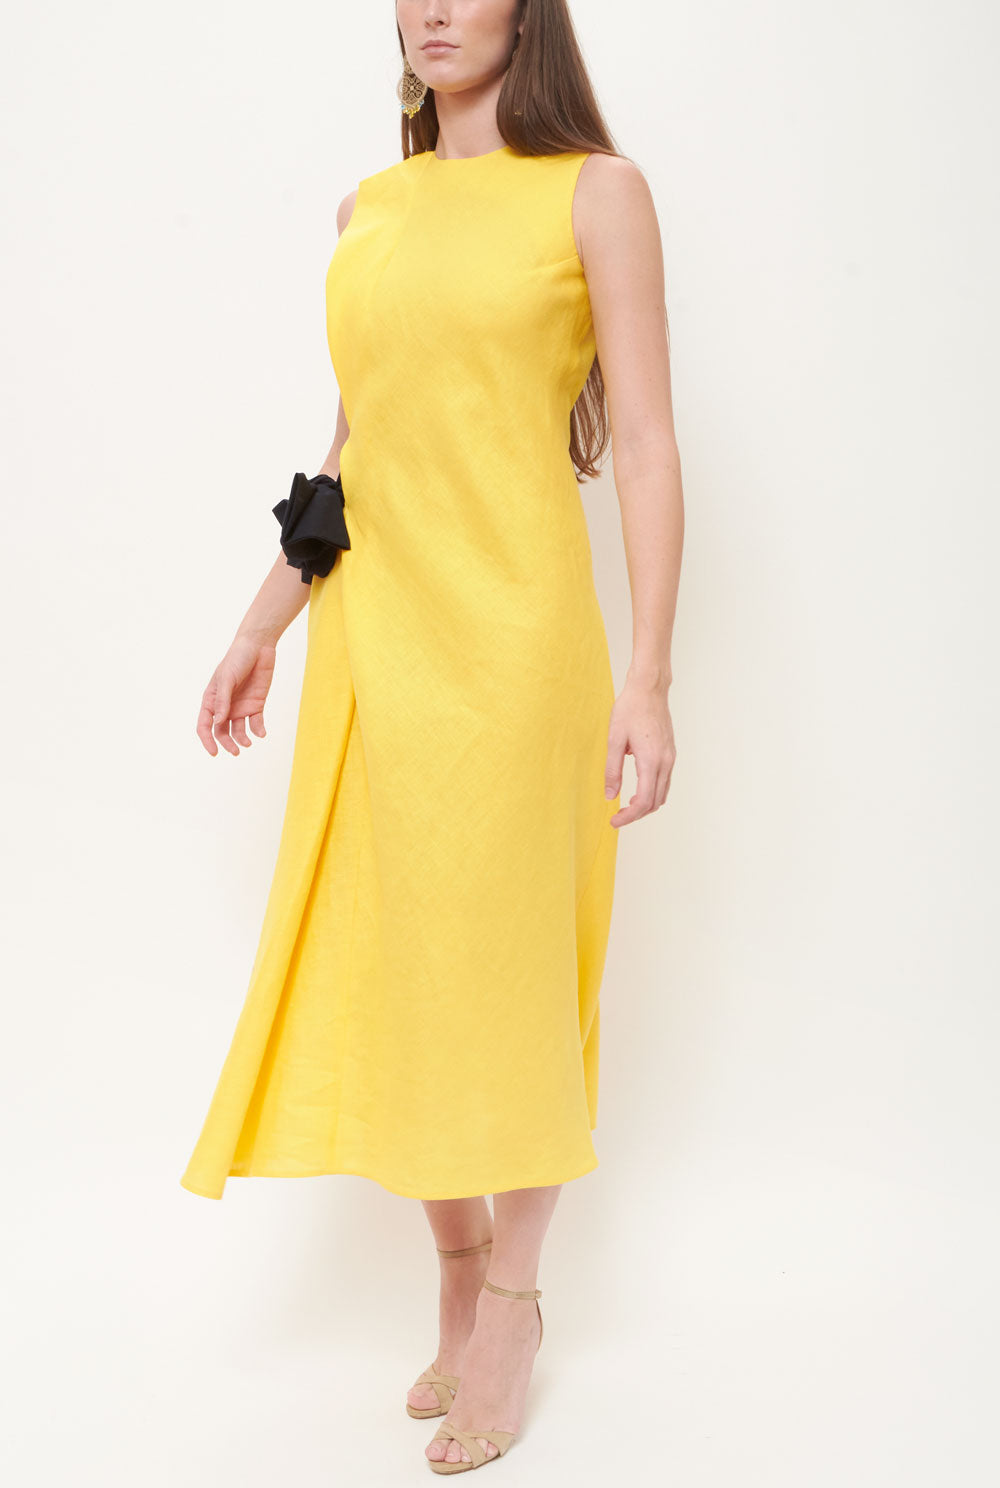 Vestido semientallado lazo Yellow - Made to order dress Devota & Lomba 